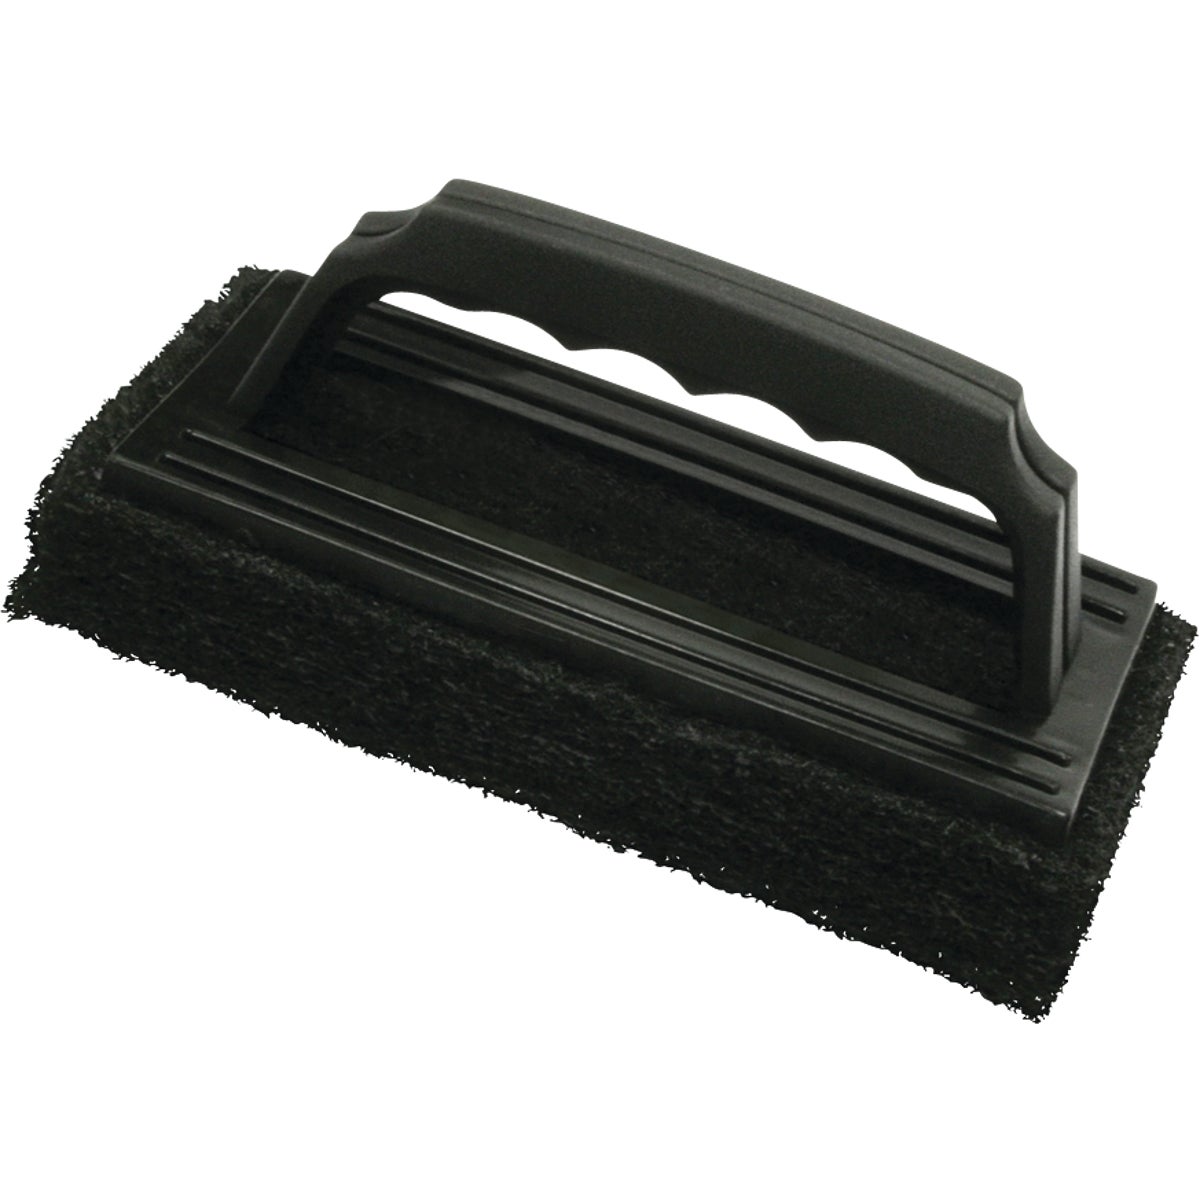 Item 831727, Abrasive nylon scrubbing brush with comfort grip handle.